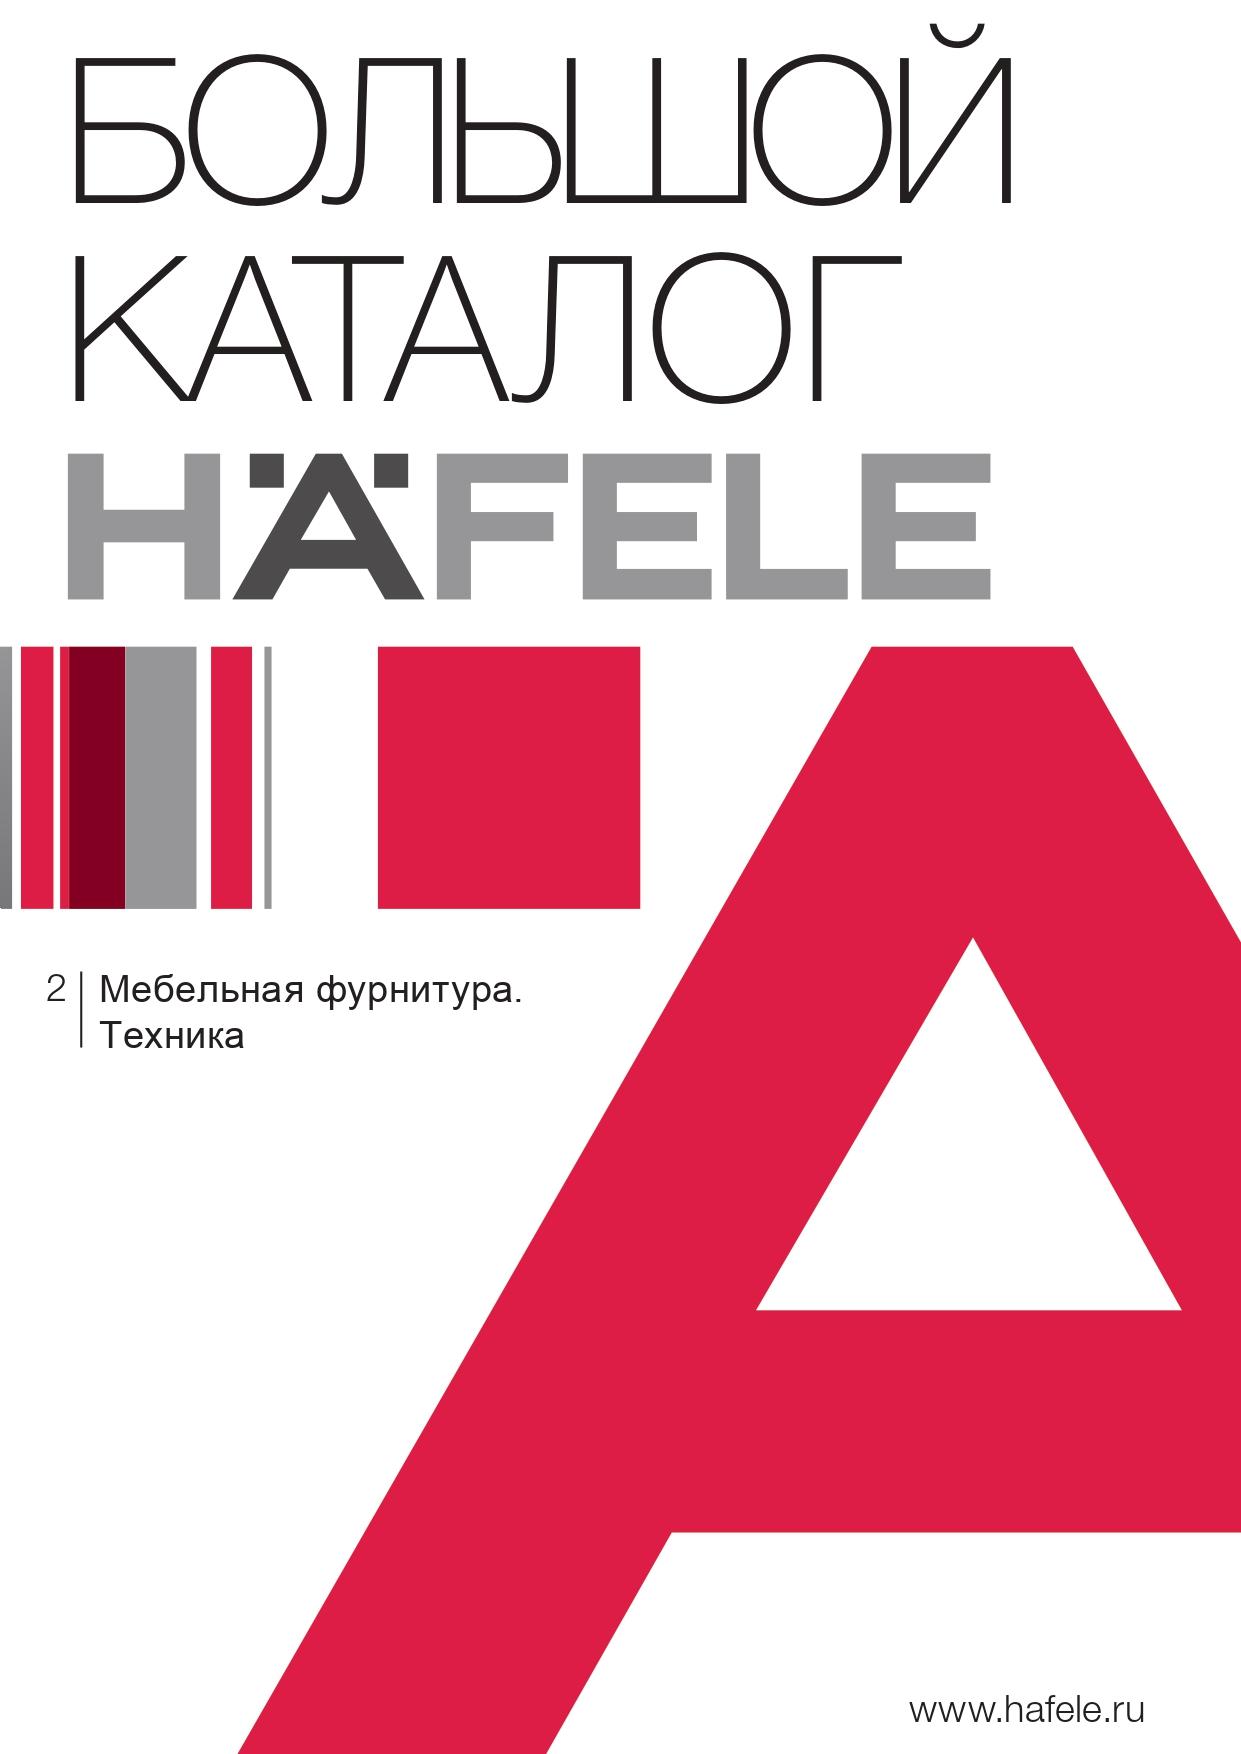 Hafele-rus-2013.jpg